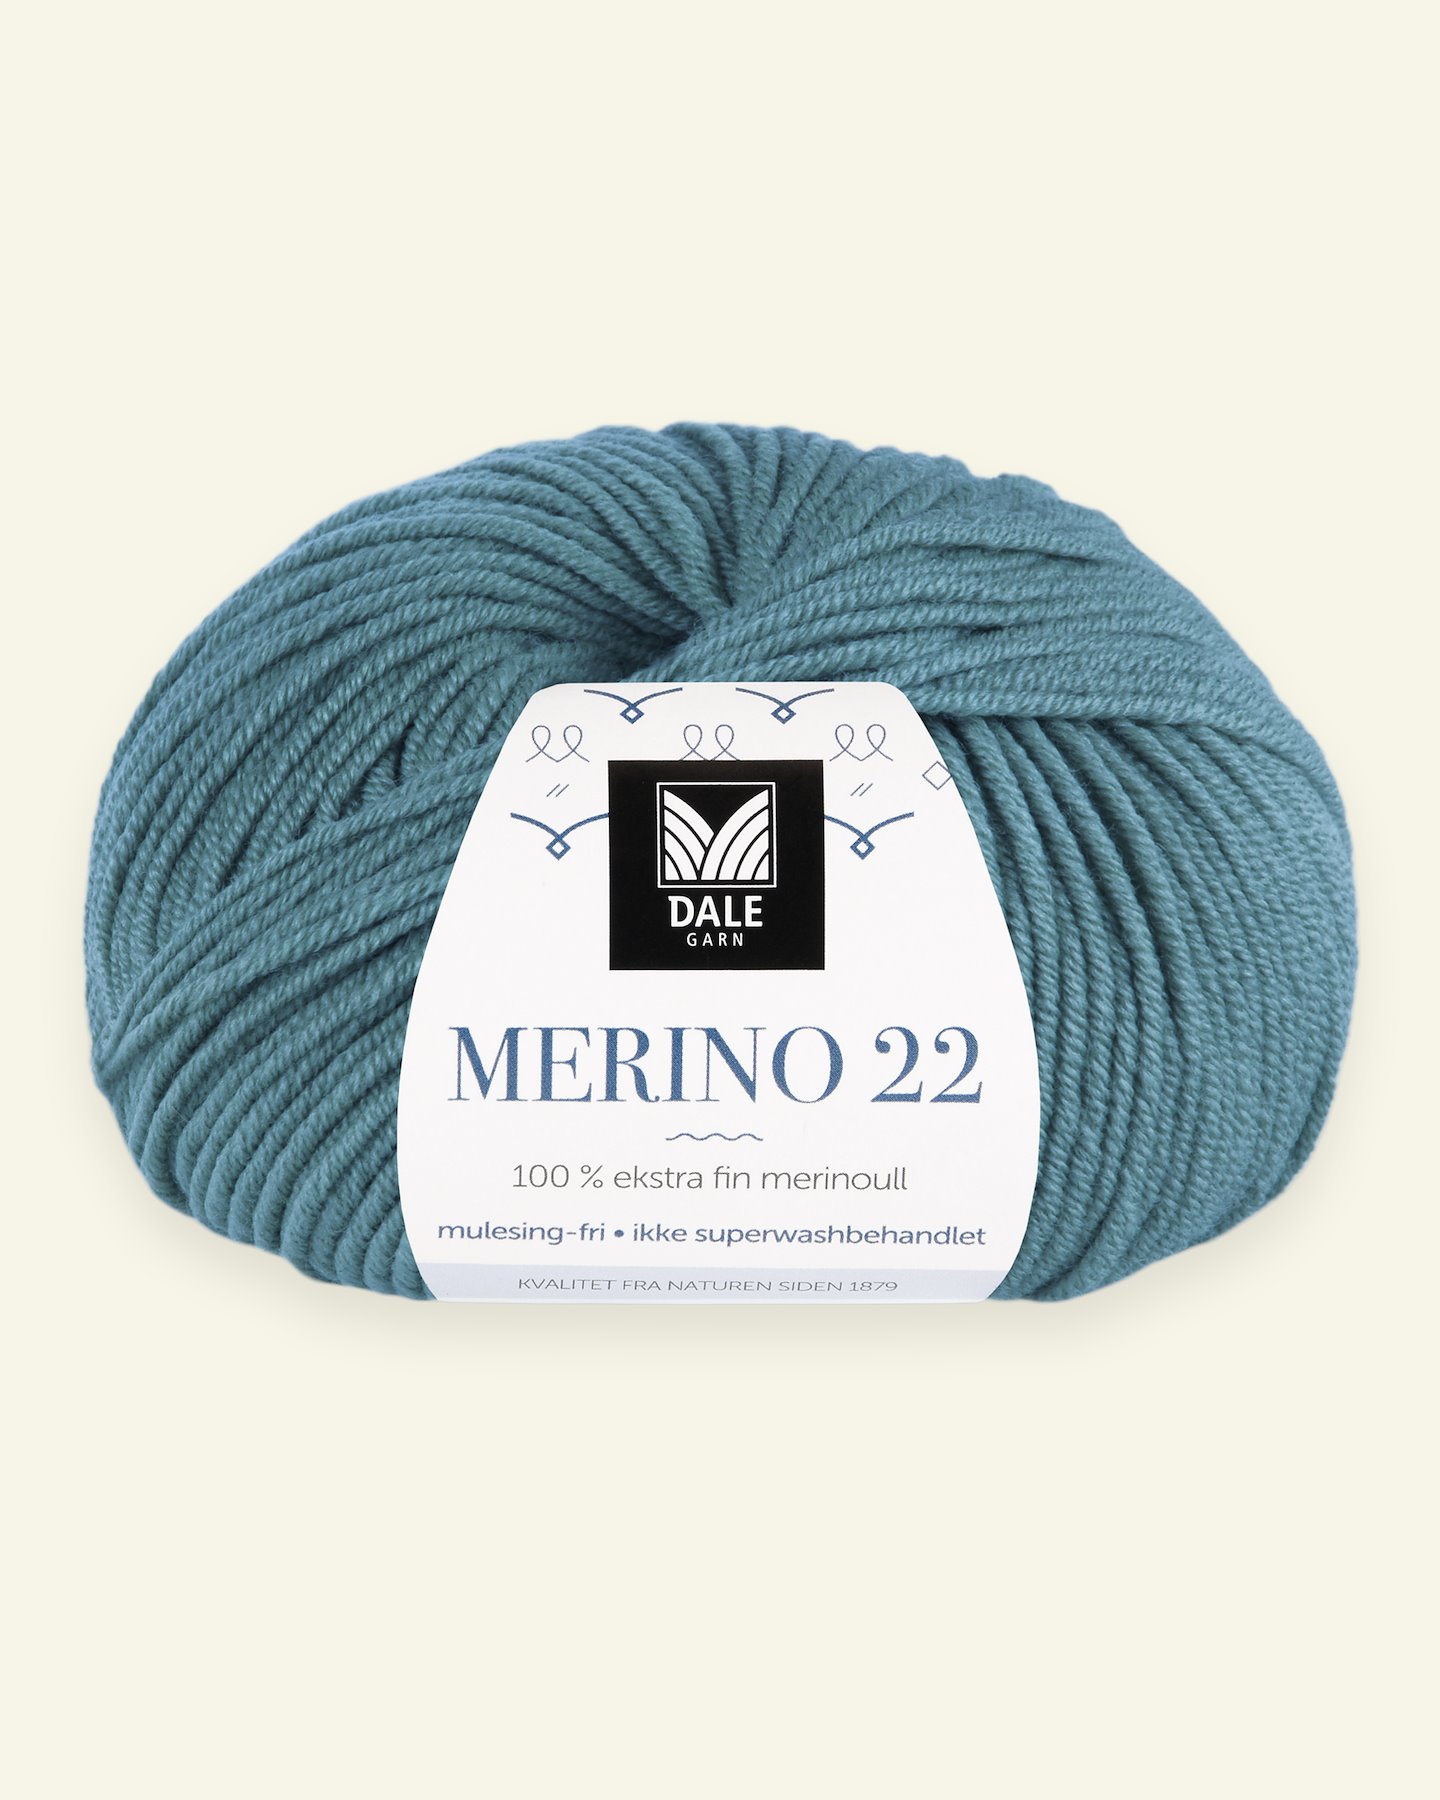 Dale Garn, 100% extra fine merino wool yarn, "Merino 22", petrol 90000372_pack